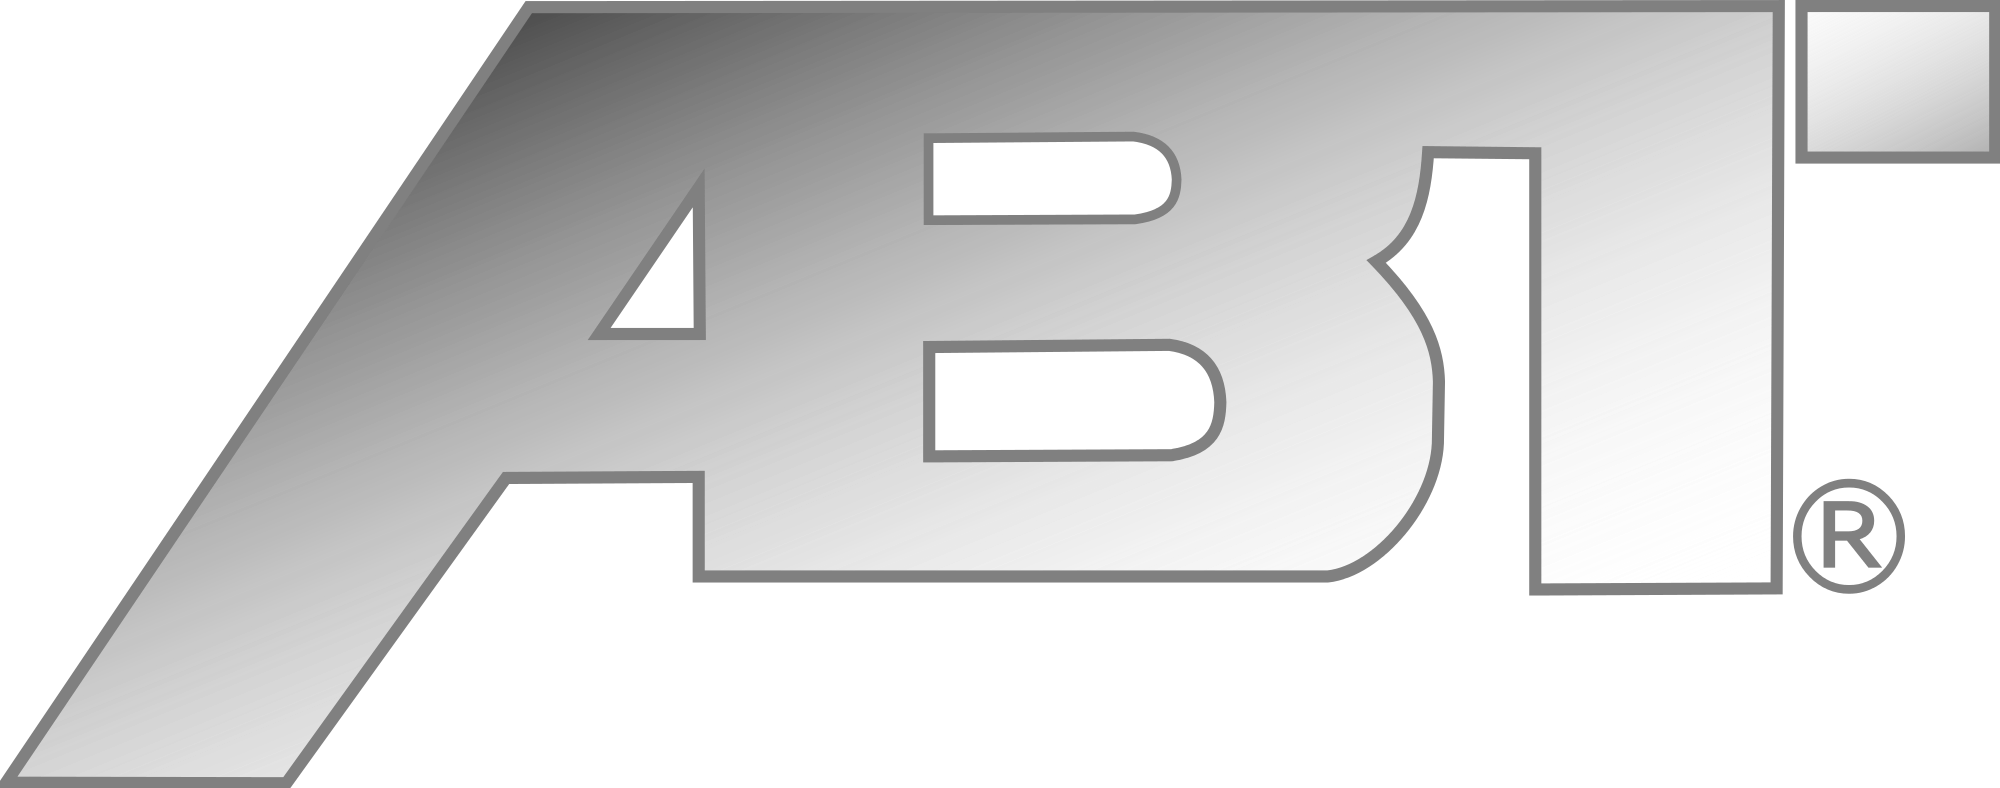 Abt logo clipart